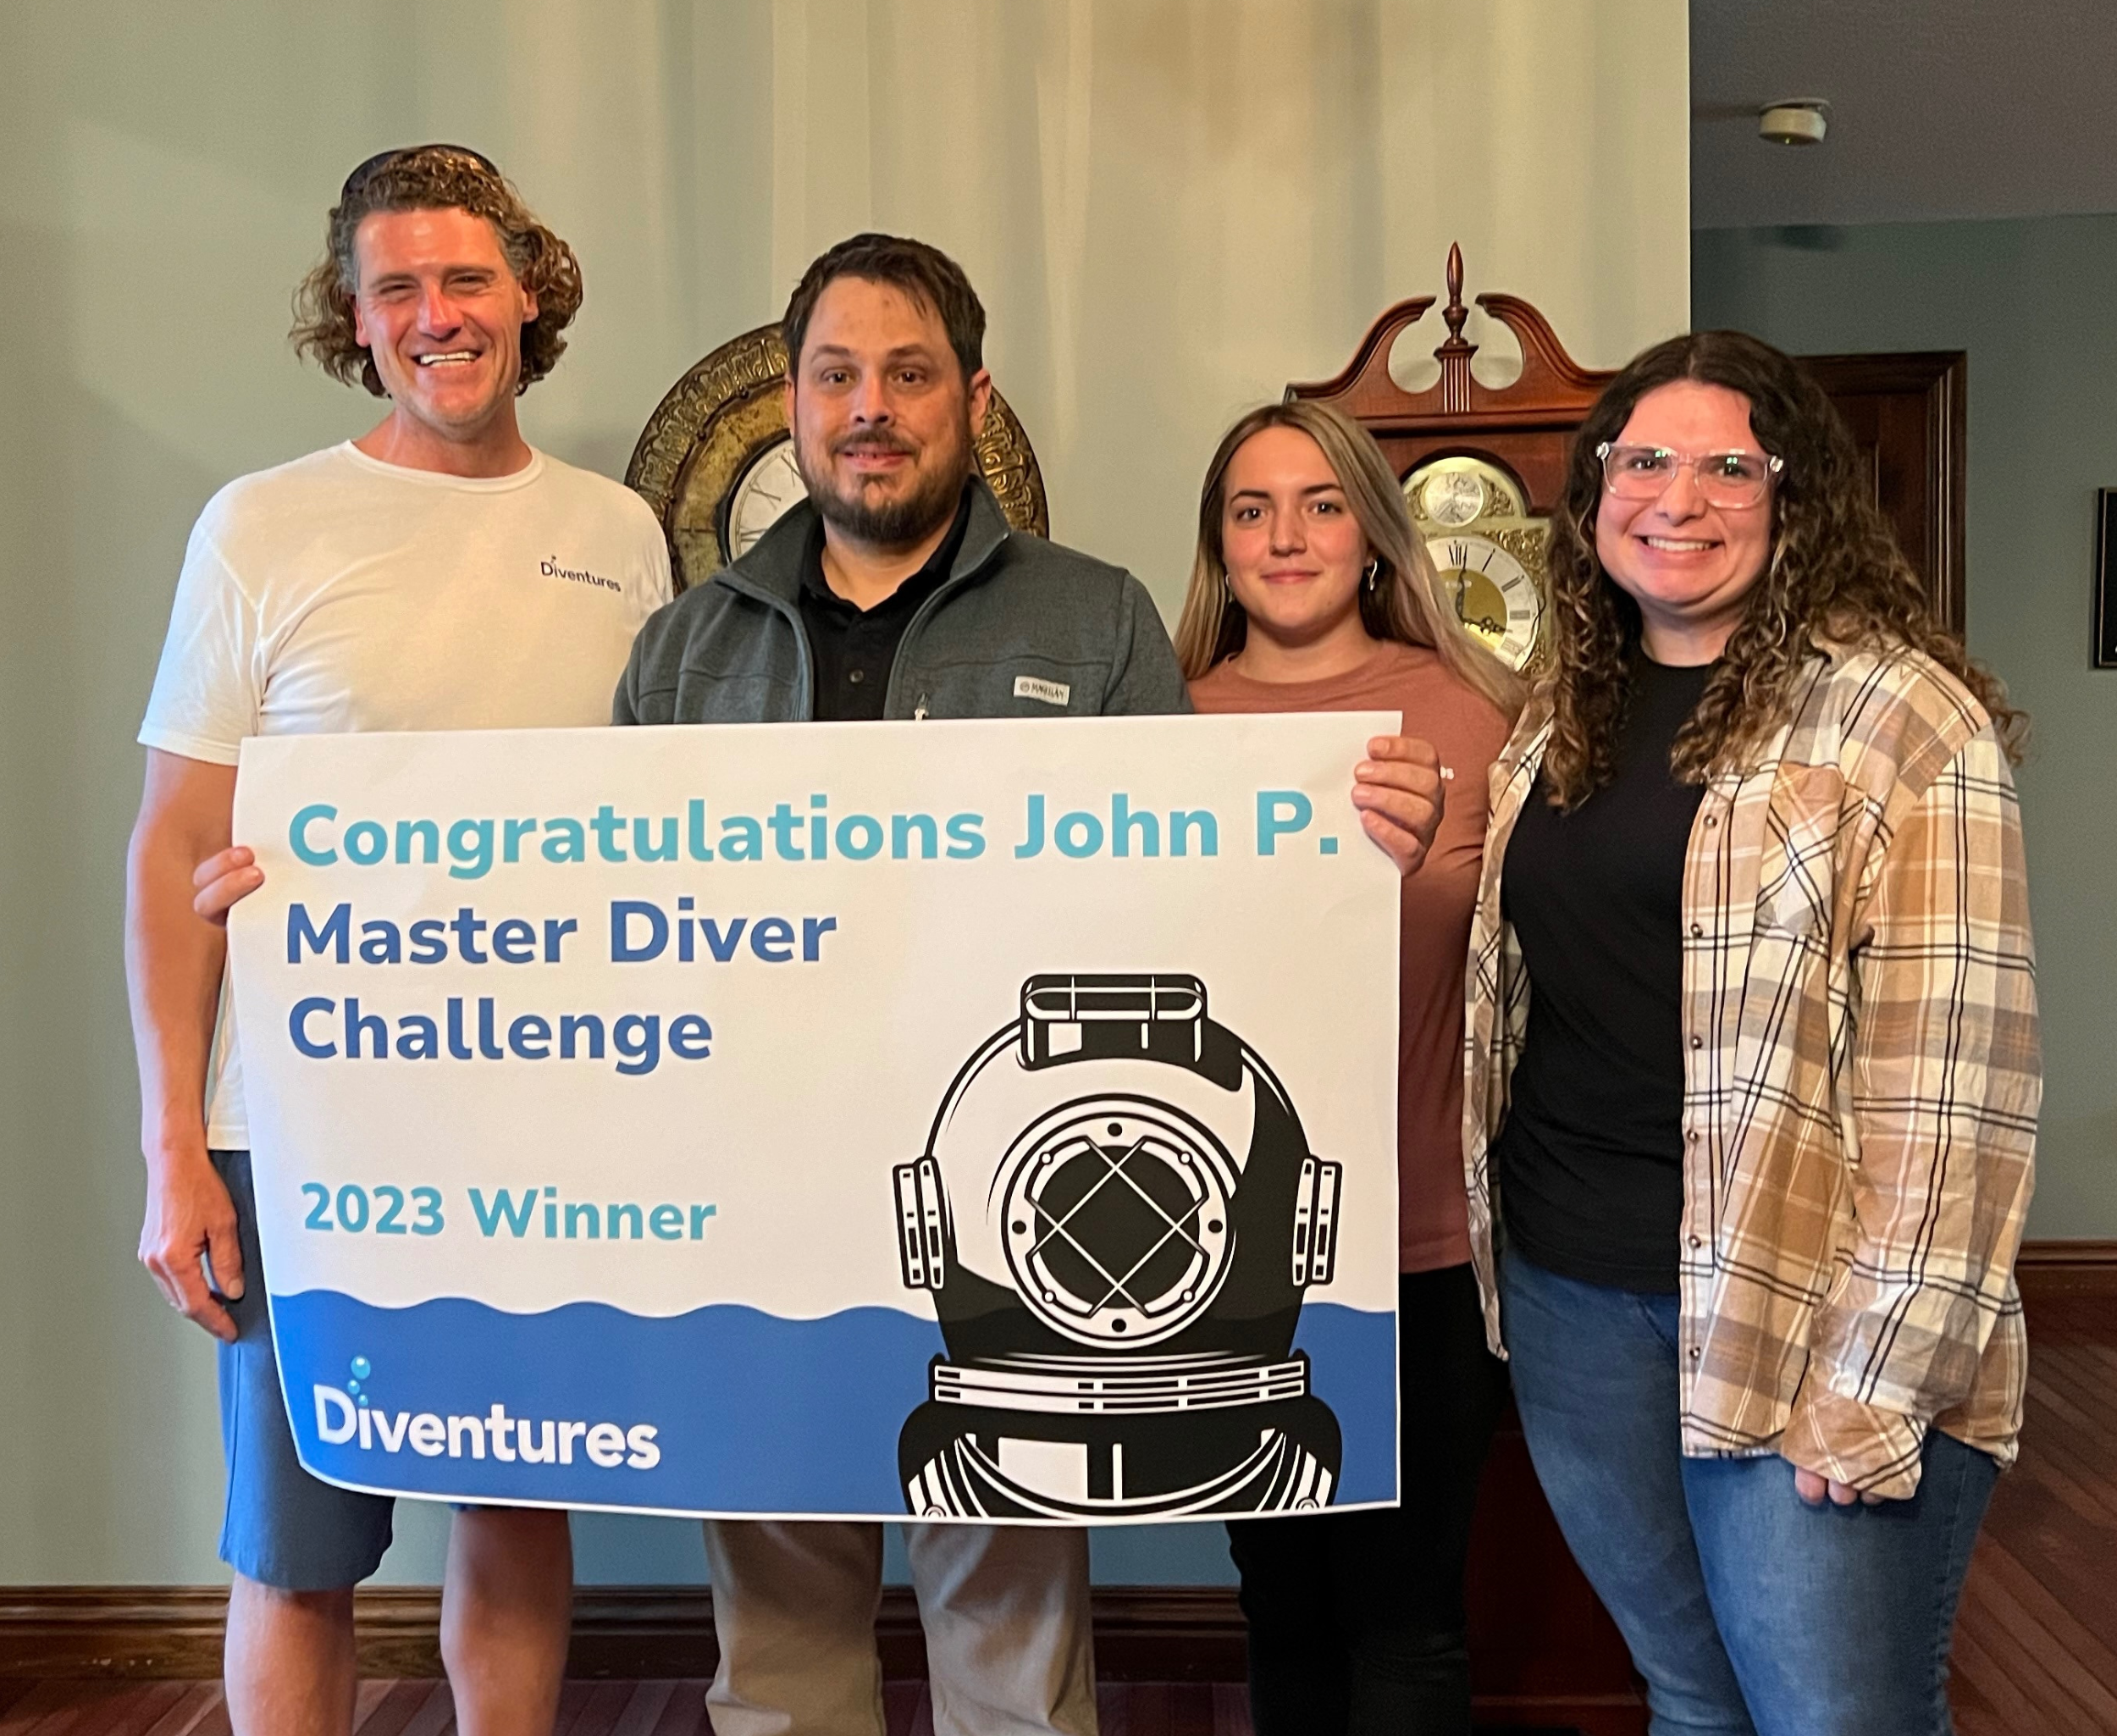 Master Diver Challenge winner 2023 John P. with Diventures staff